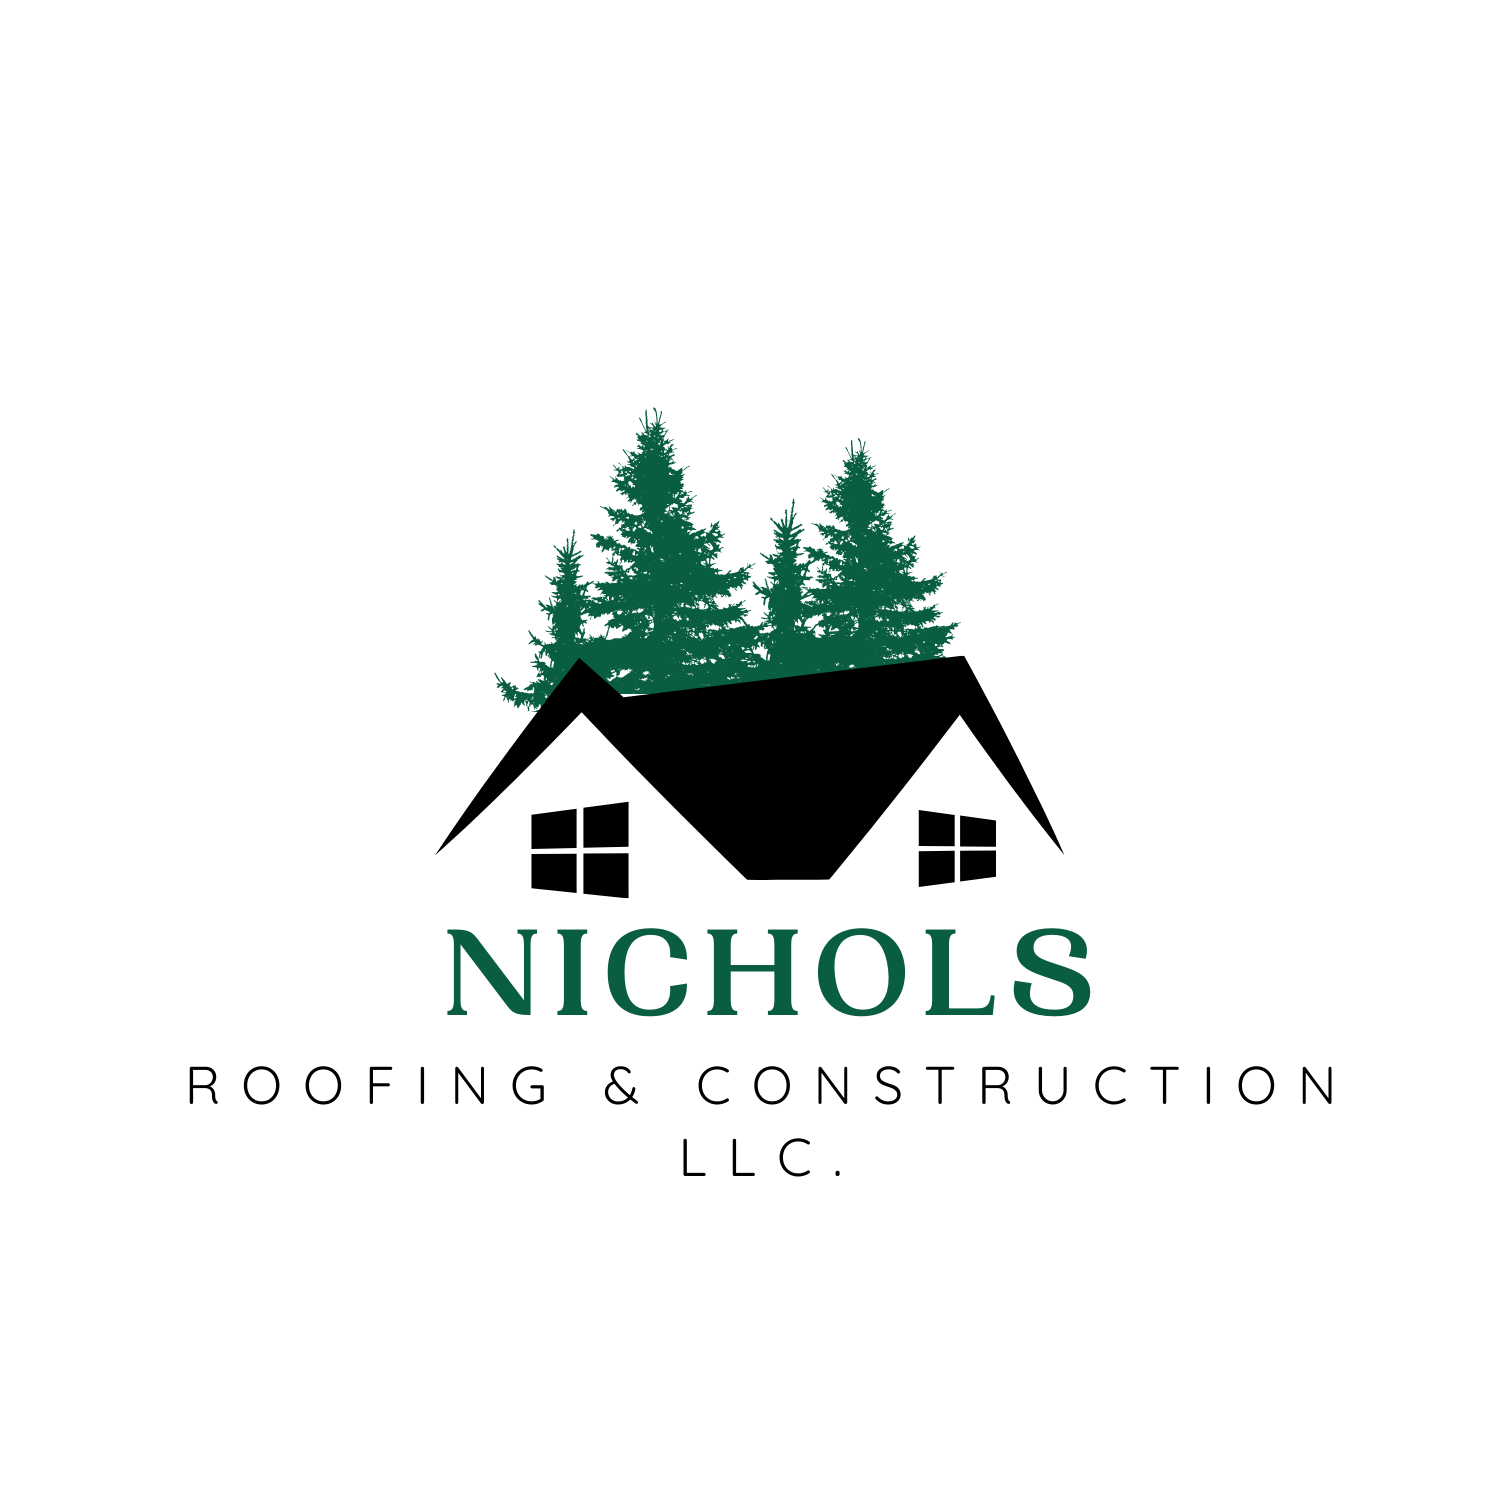 Nichols Roofing & Construction, LLC. - Rusk, TX - (903)277-9811 | ShowMeLocal.com